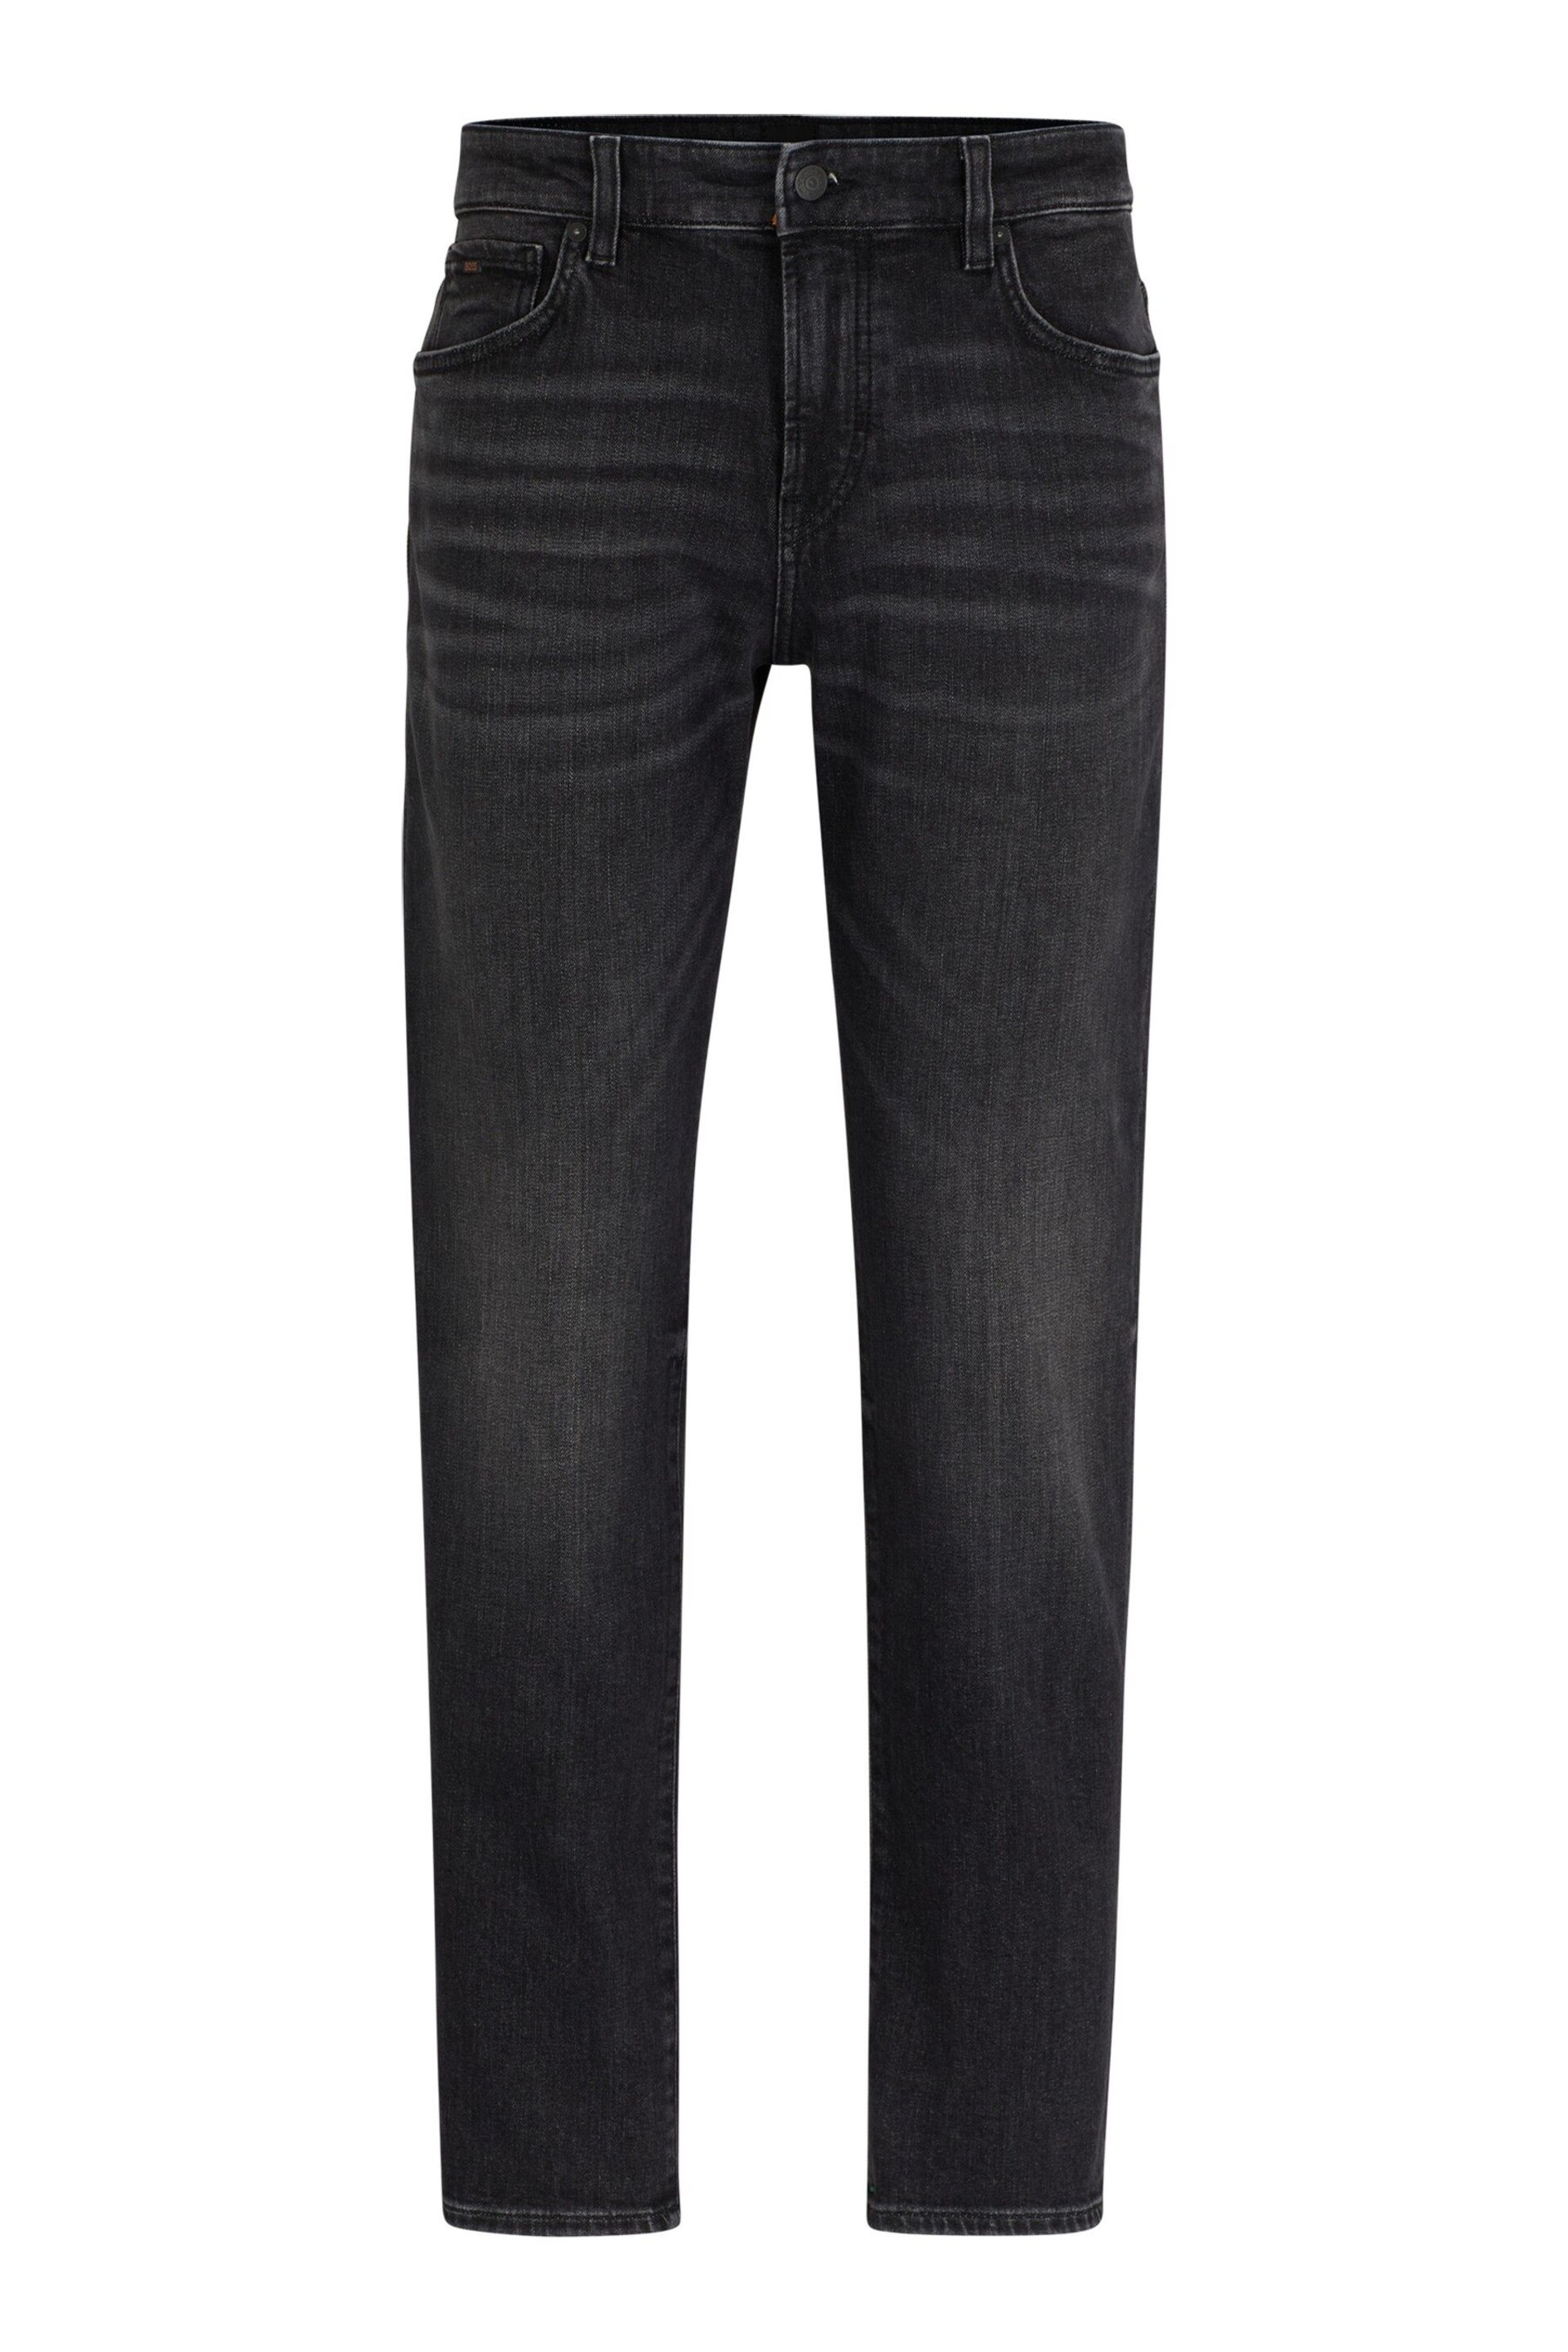 BOSS Grey Regular Fit Taper Comfort Stretch Denim Jeans - Image 5 of 5